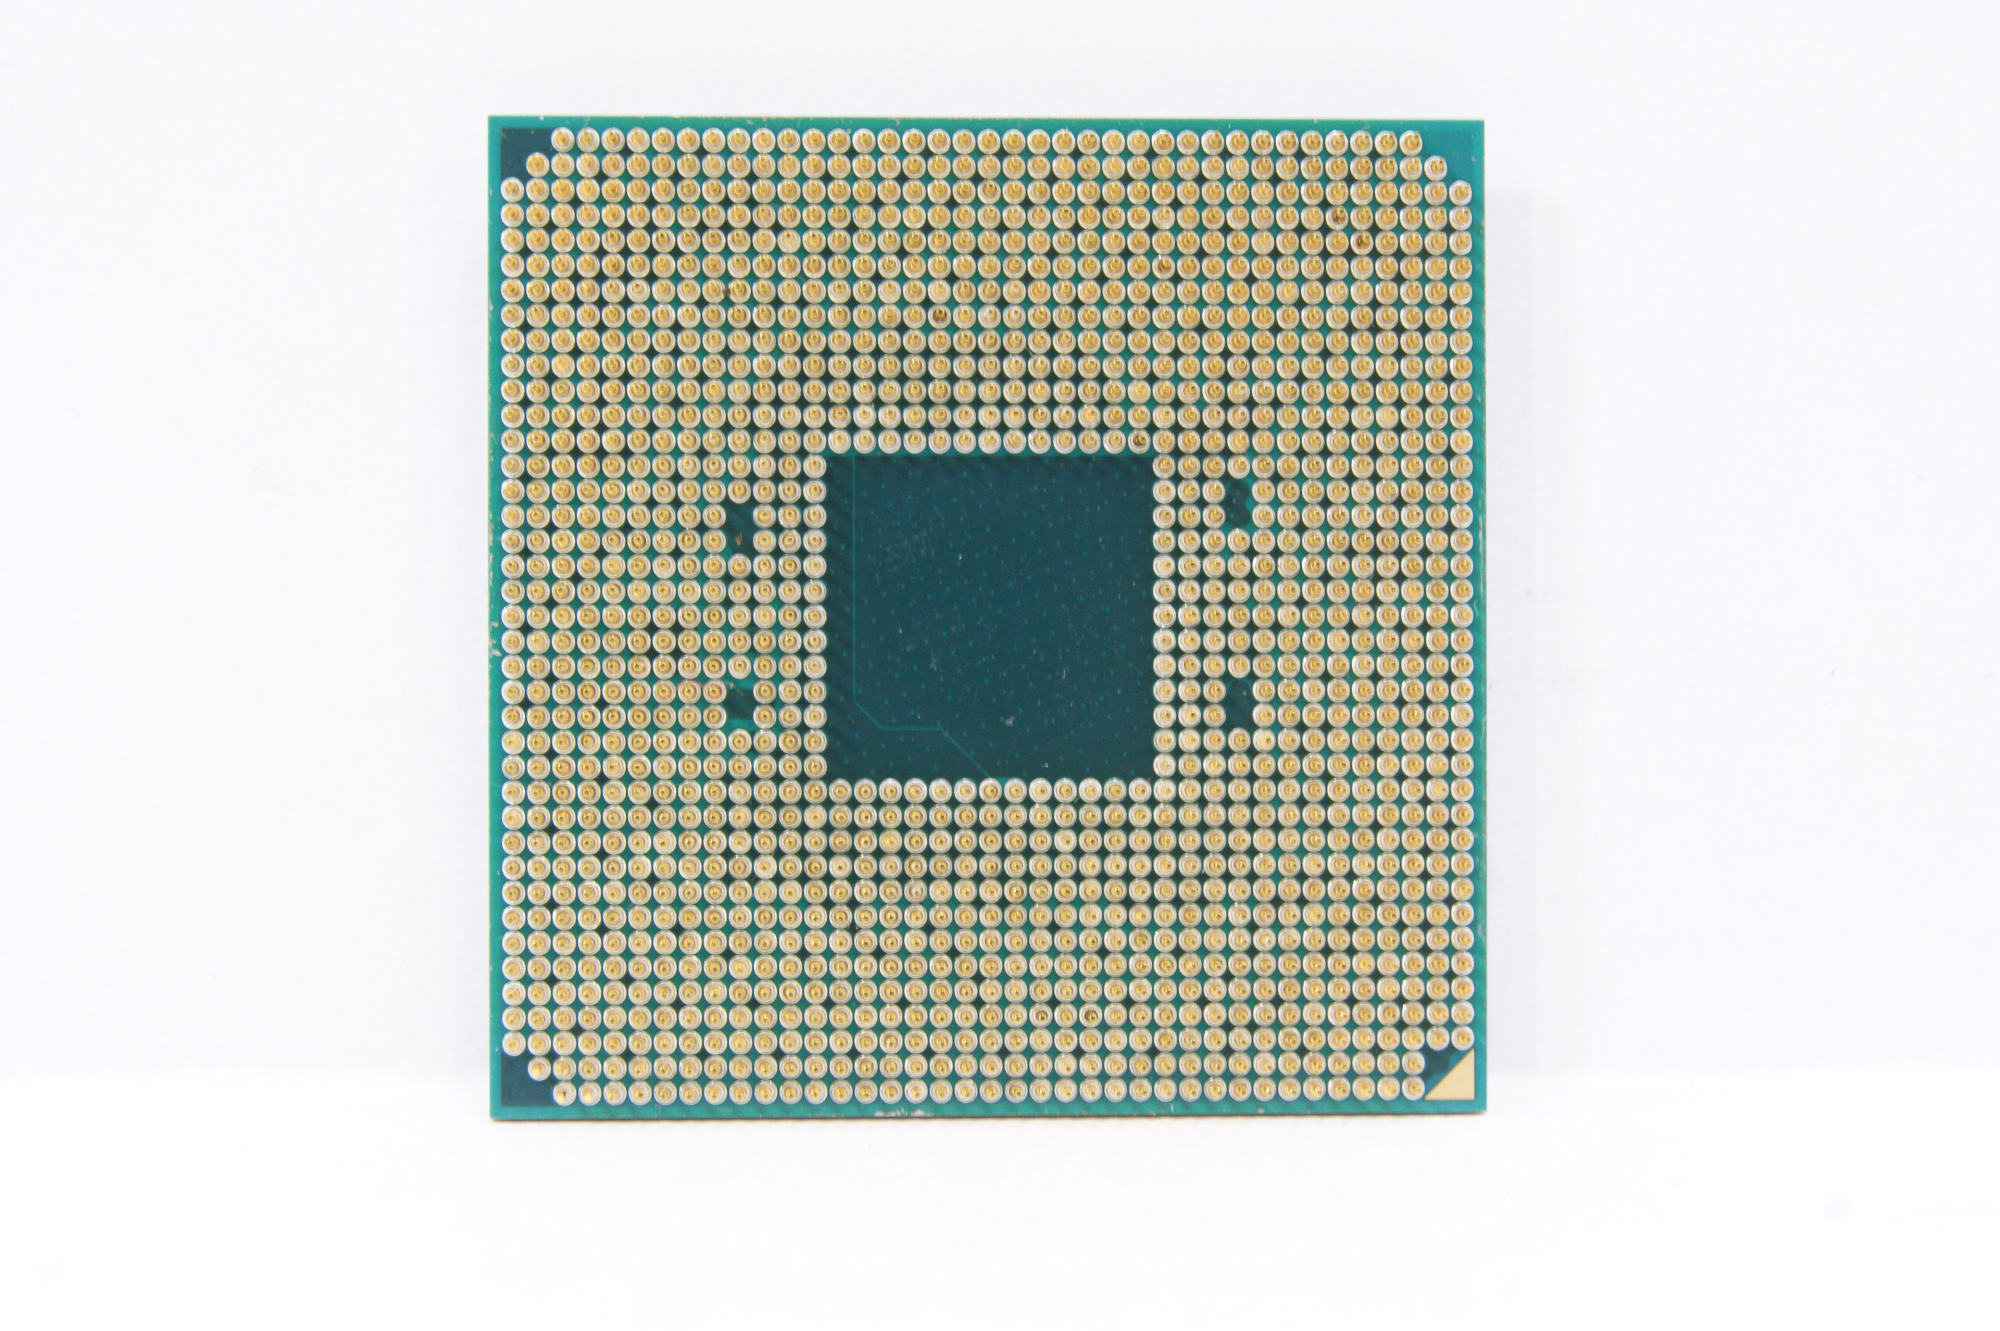 5 3600 сокет. Процессор AMD Ryzen 5 2400g. Am4 сокет. AMD am4 процессоры. Процессор AMD Ryzen 5 Pro 2400g.